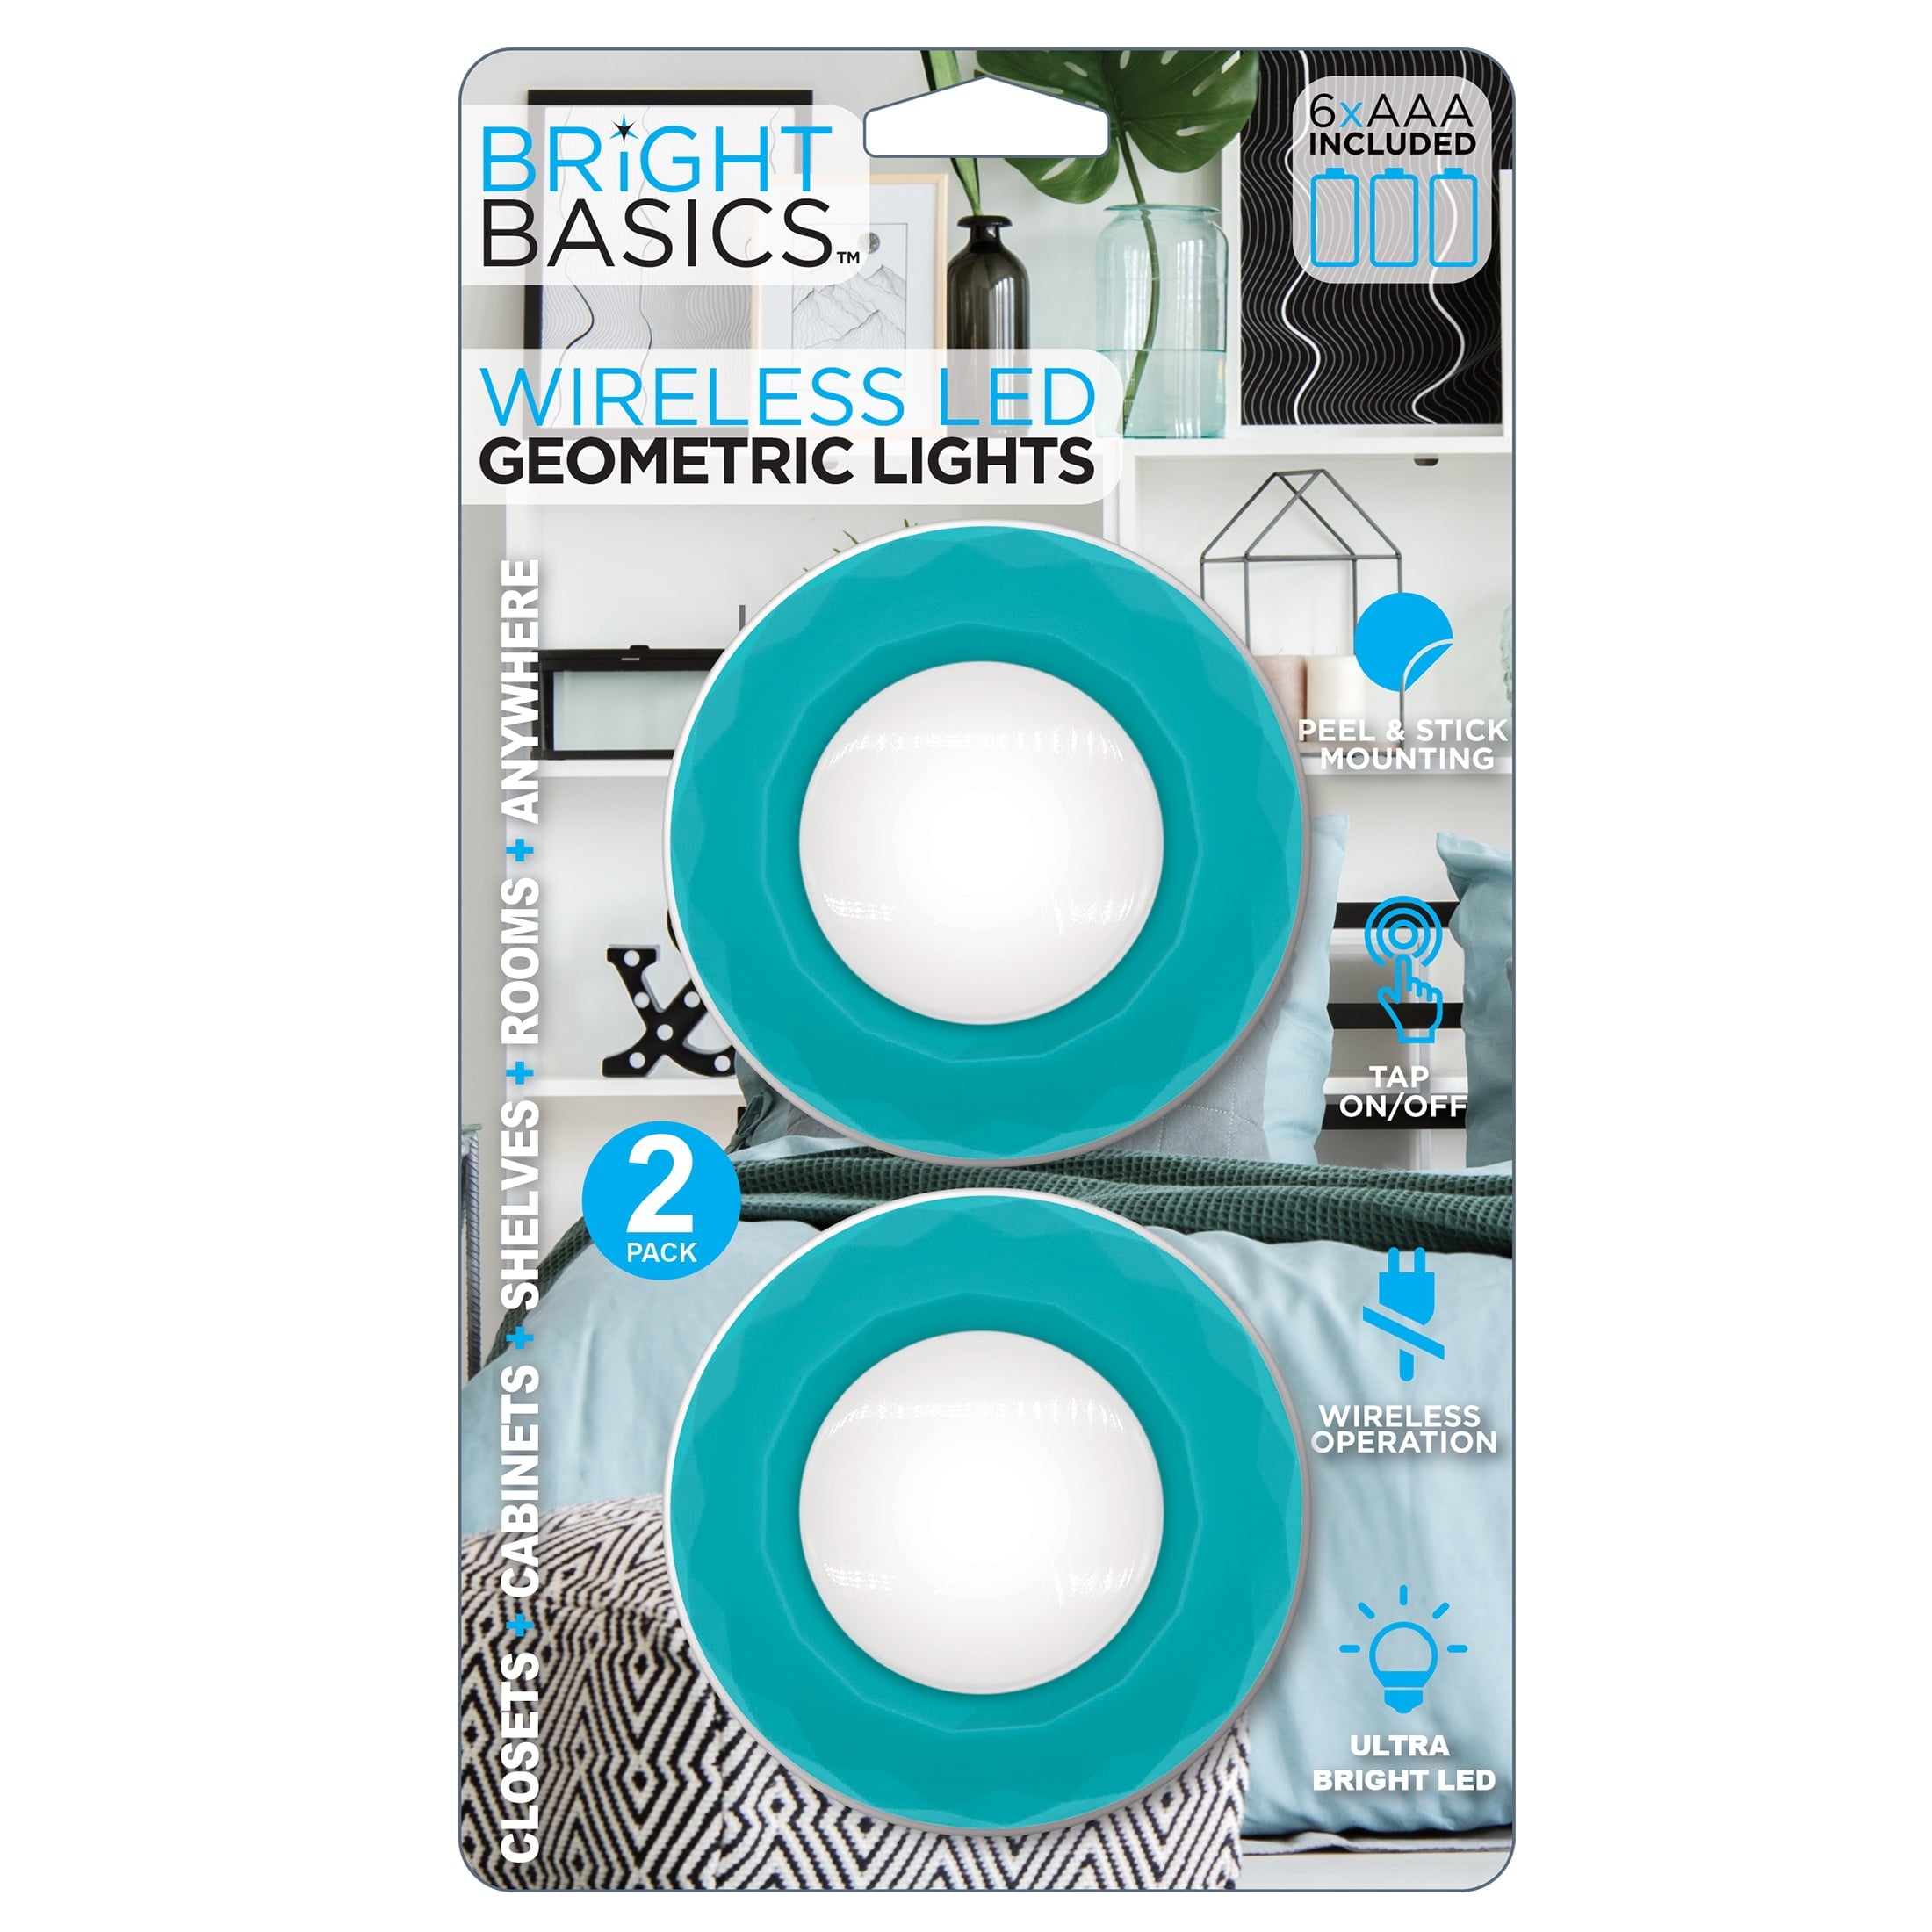 Bright Basics Wireless LED Geometric Lights, 4 Pack